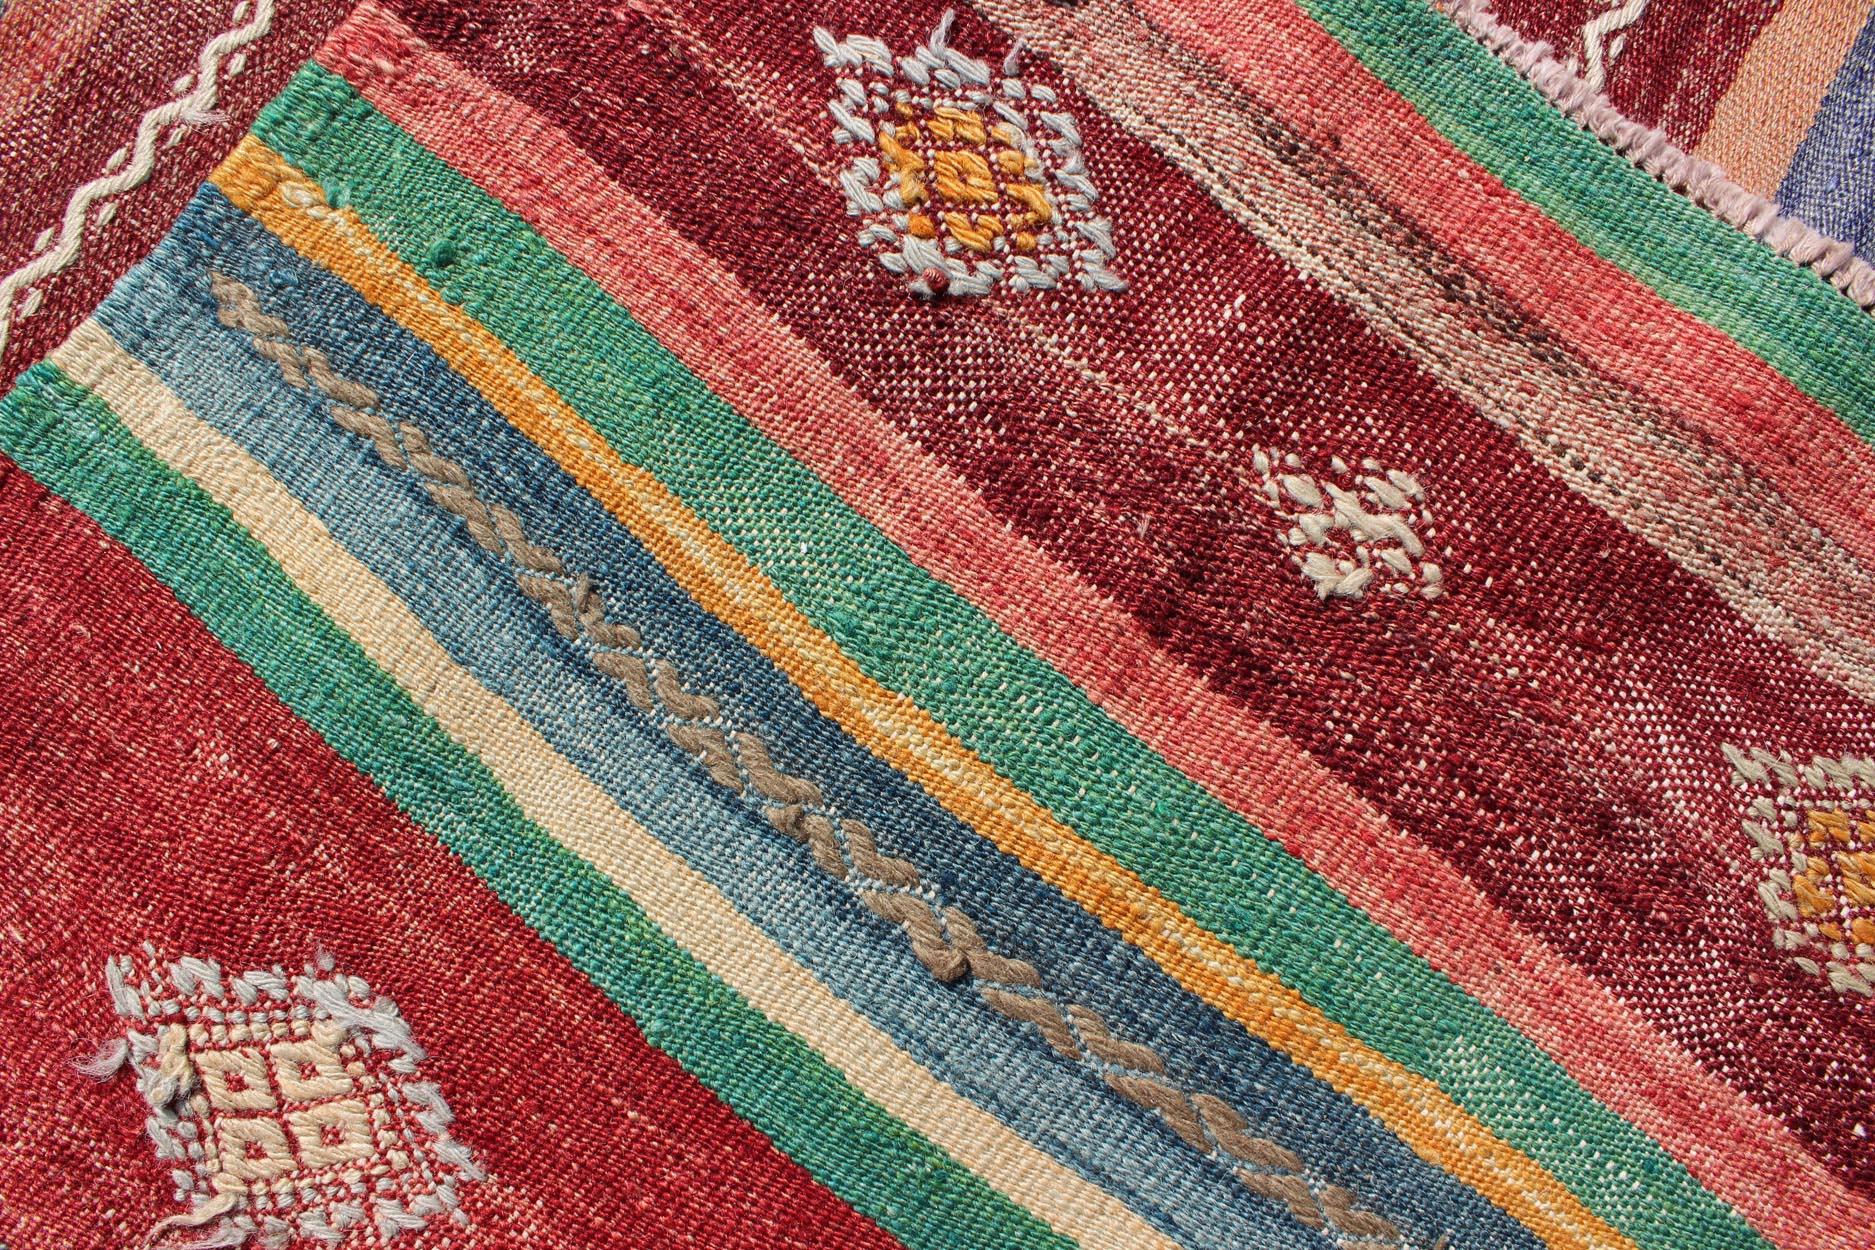 Colorful Vintage Turkish Flat-Weave Kilim Rug with Striped Geometric Design 4